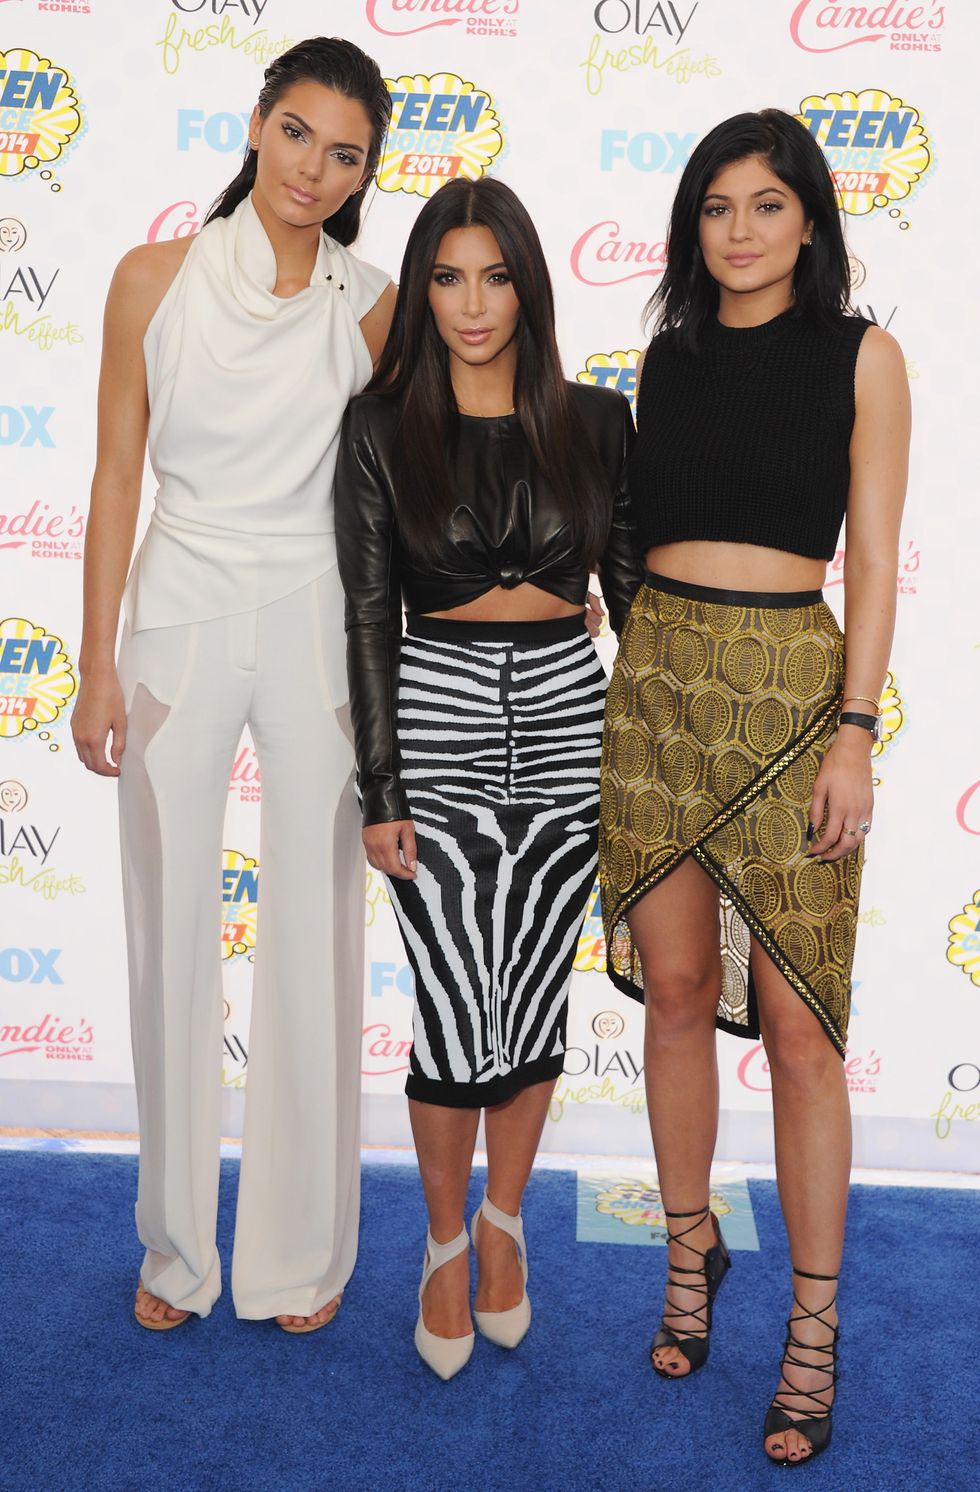 Kendall Jenner, Kim Kardashian and Kylie Jenner at the Teen Choice Awards 2014 - celebrity style photos - cosmopolitan.co.uk